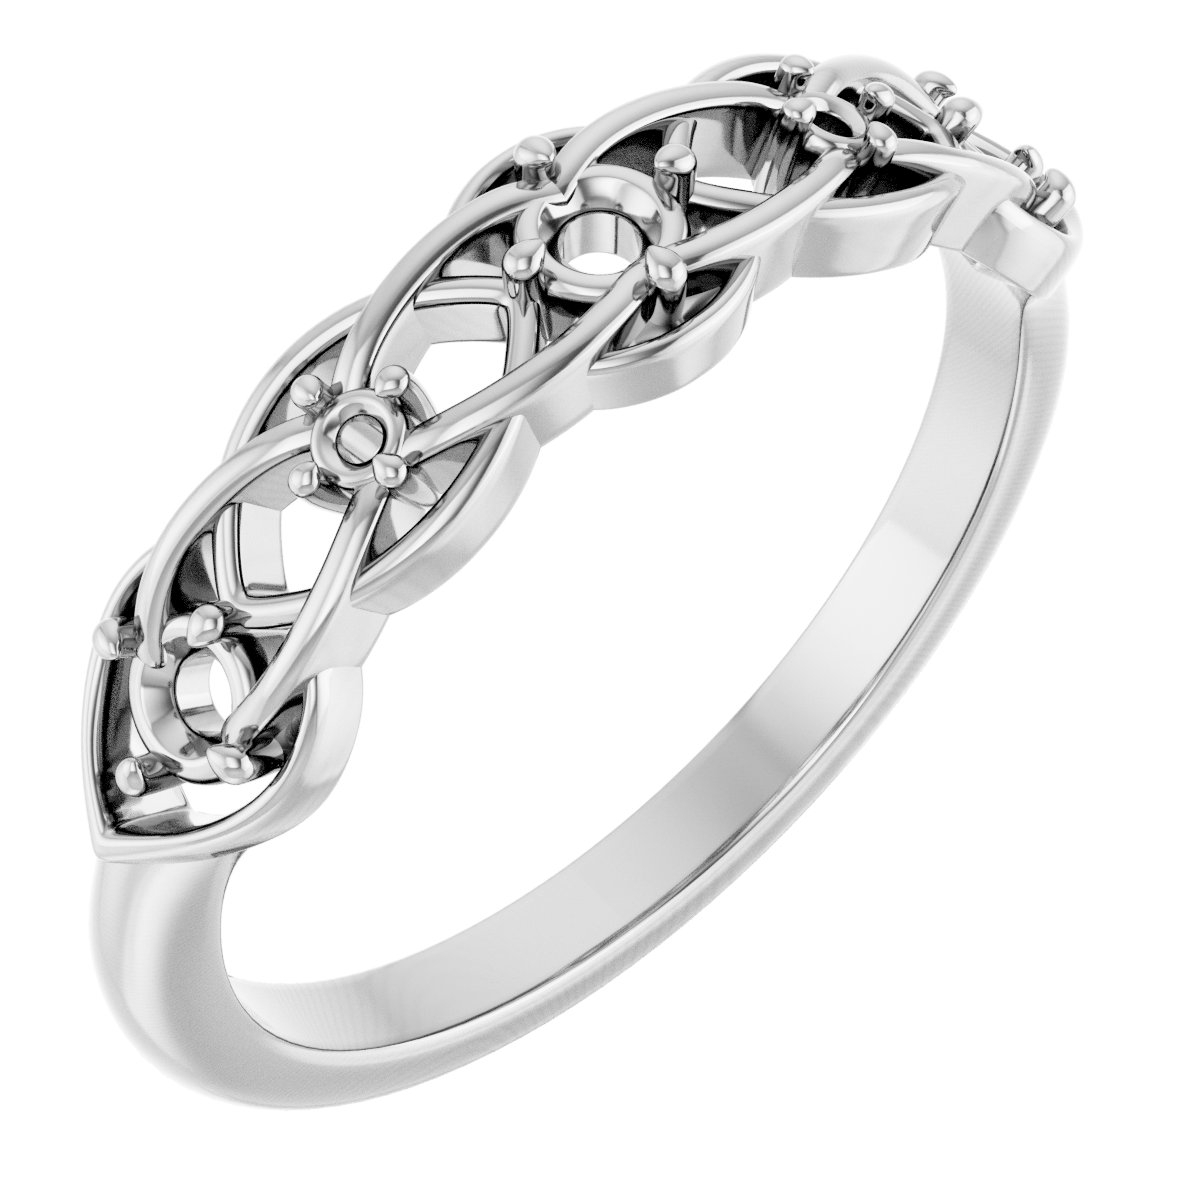 https://meteor.stullercloud.com/das/73511463?obj=metals&obj=stones/diamonds/g_accent 2&obj=stones/diamonds/g_accent 1&obj=metals&obj.recipe=white&$xlarge$